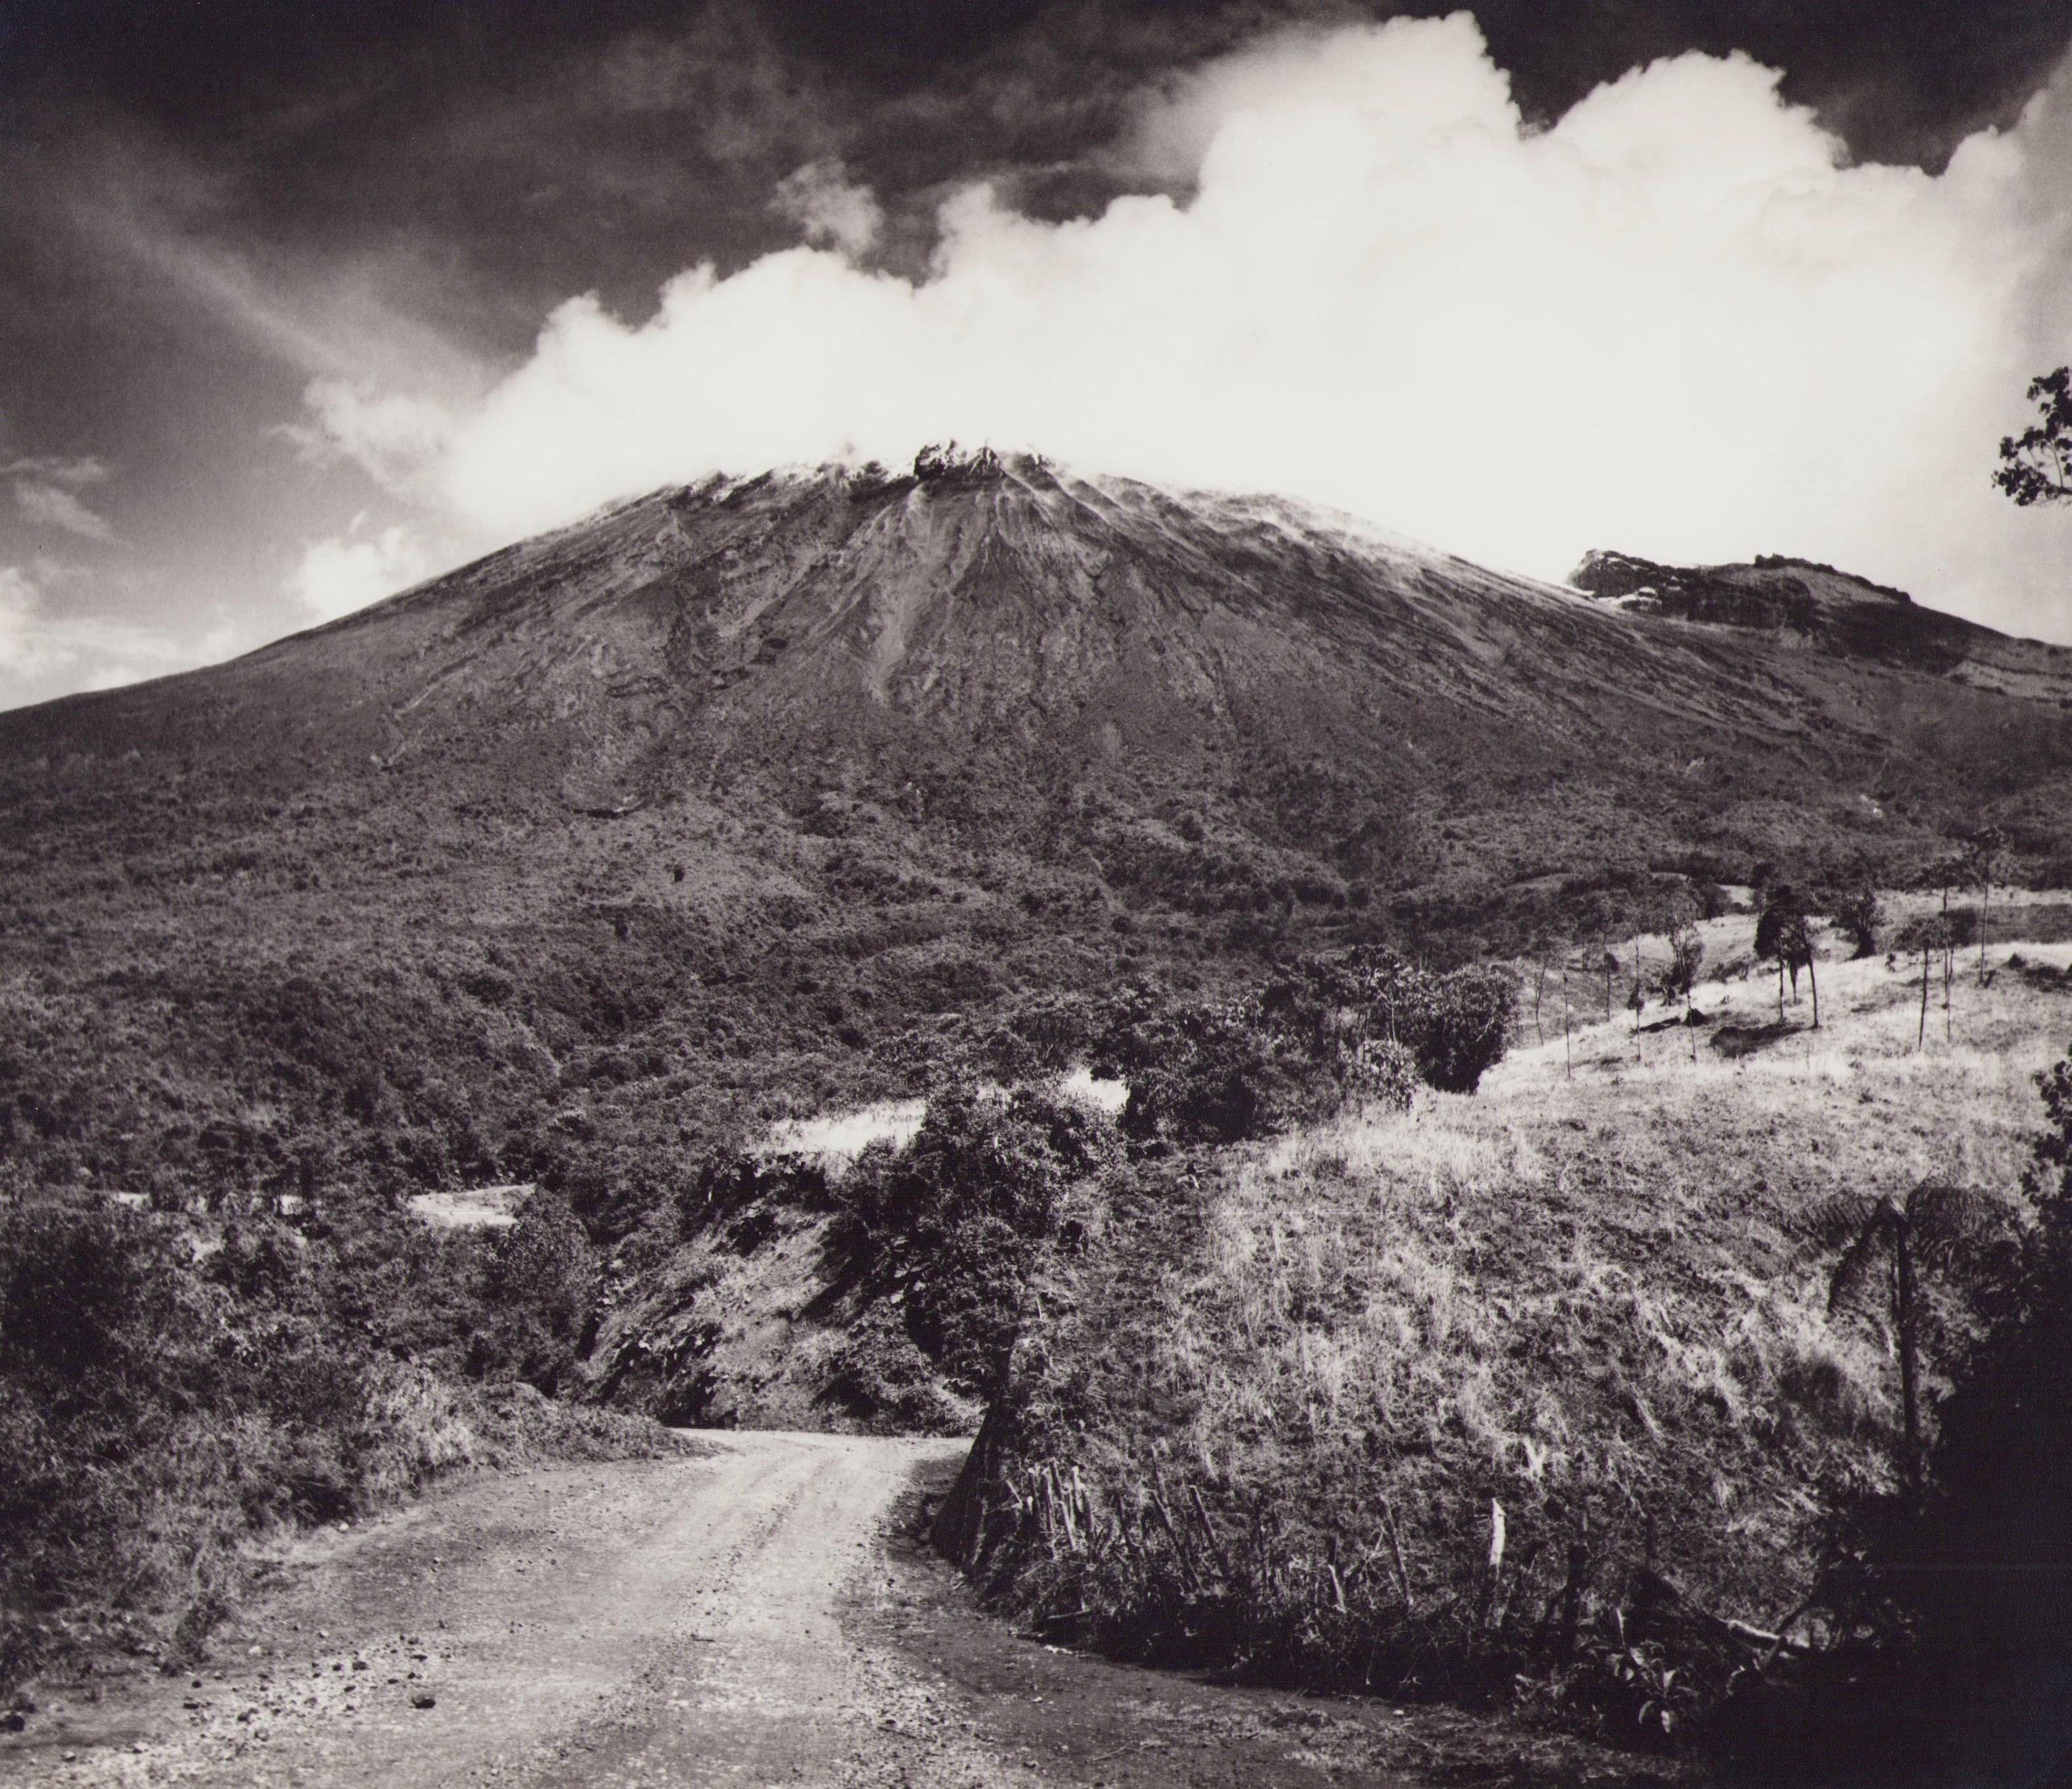 Hanna Seidel Portrait Photograph - Ecuador, Vulcano, Landscape, Black and White Photography, 1960s, 23, 2 x 27, 2 cm